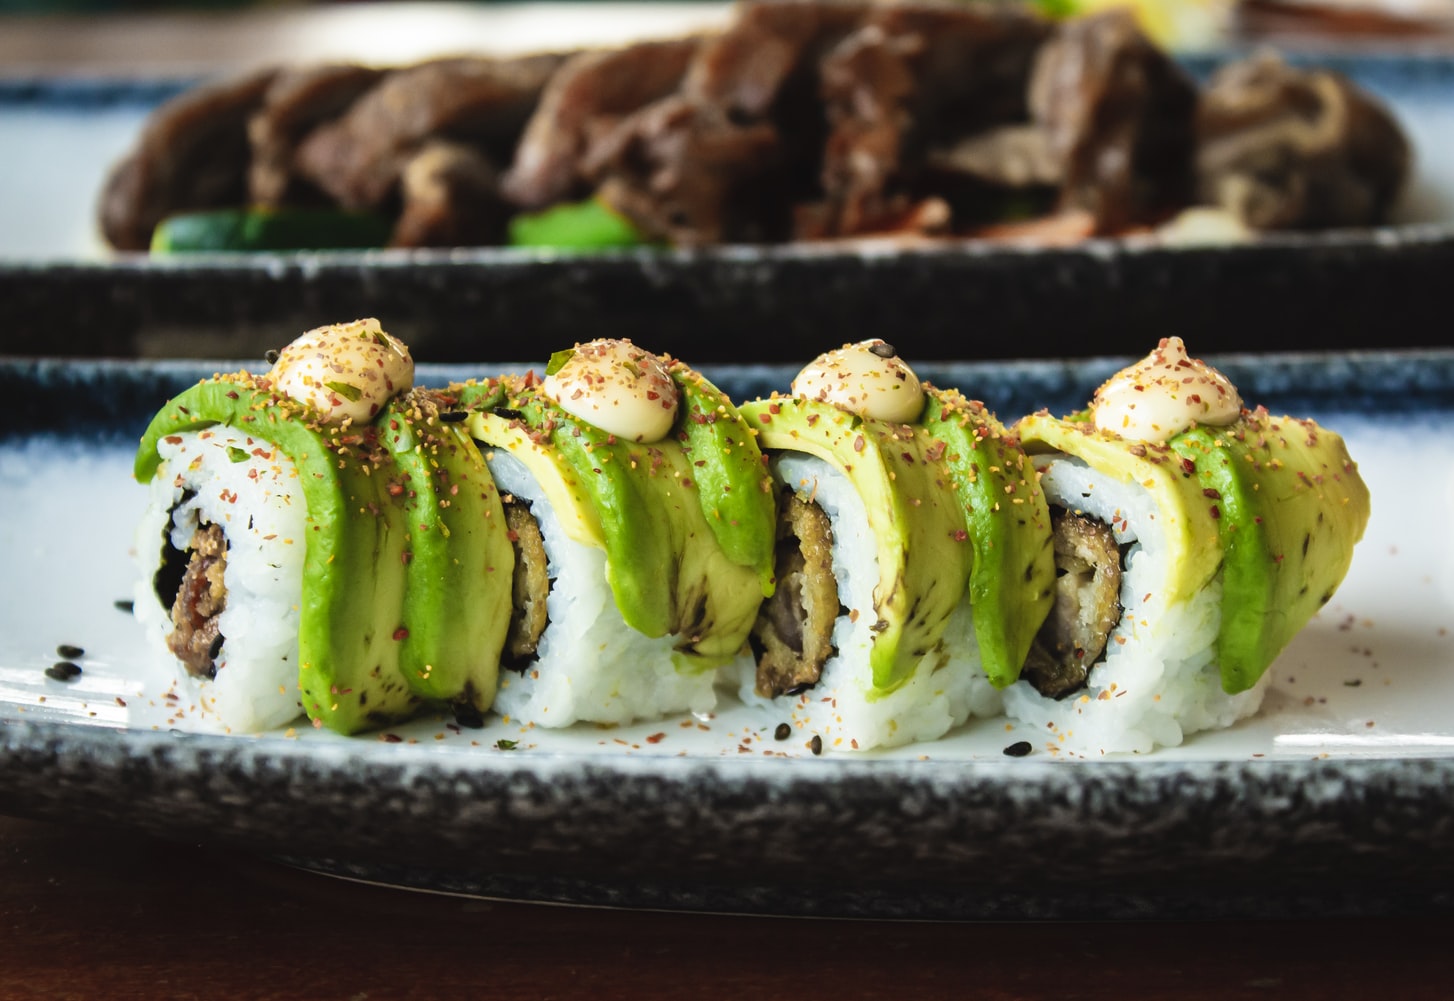 Let’s Roll! The Best Sushi Restaurants in Studio City